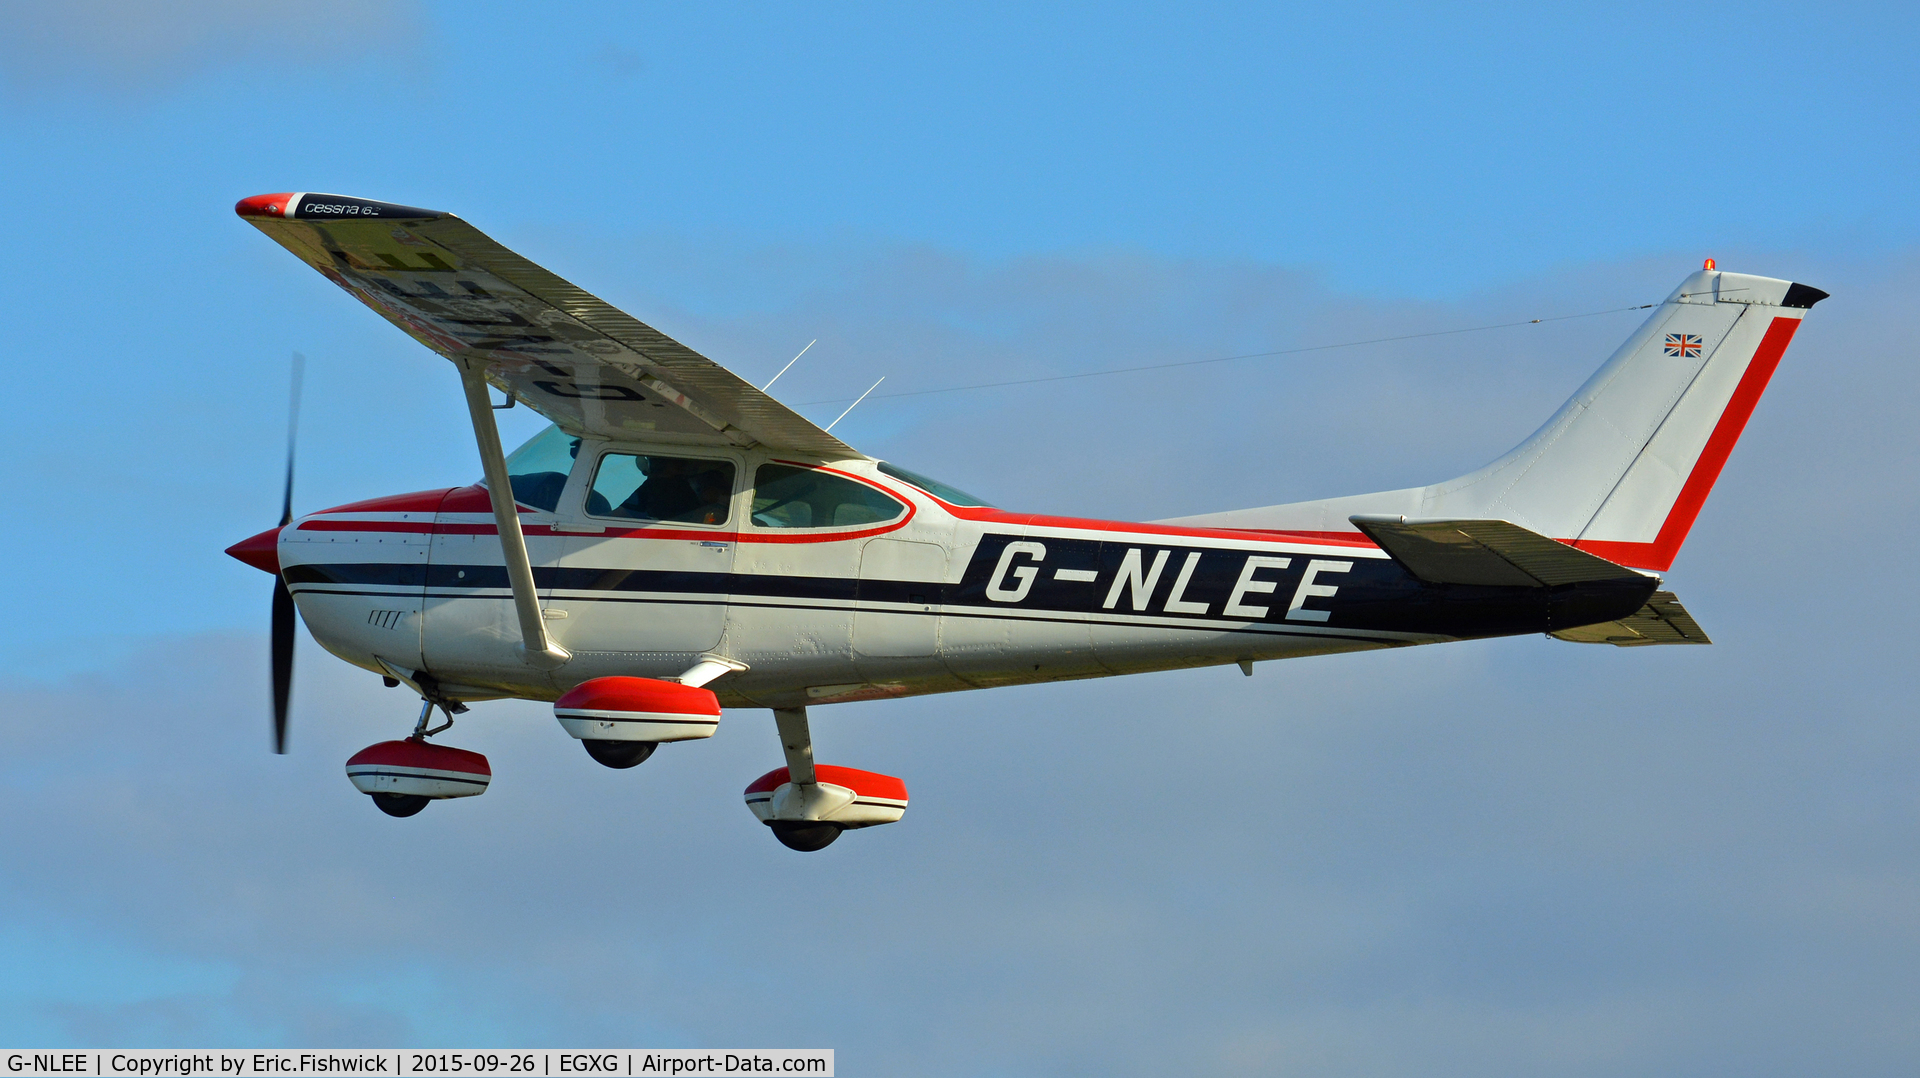 G-NLEE, 1977 Cessna 182Q Skylane C/N 182-65934, 44. G-NLEE departing The Yorkshire Air Show, Church Fenton, Sept. 2015.